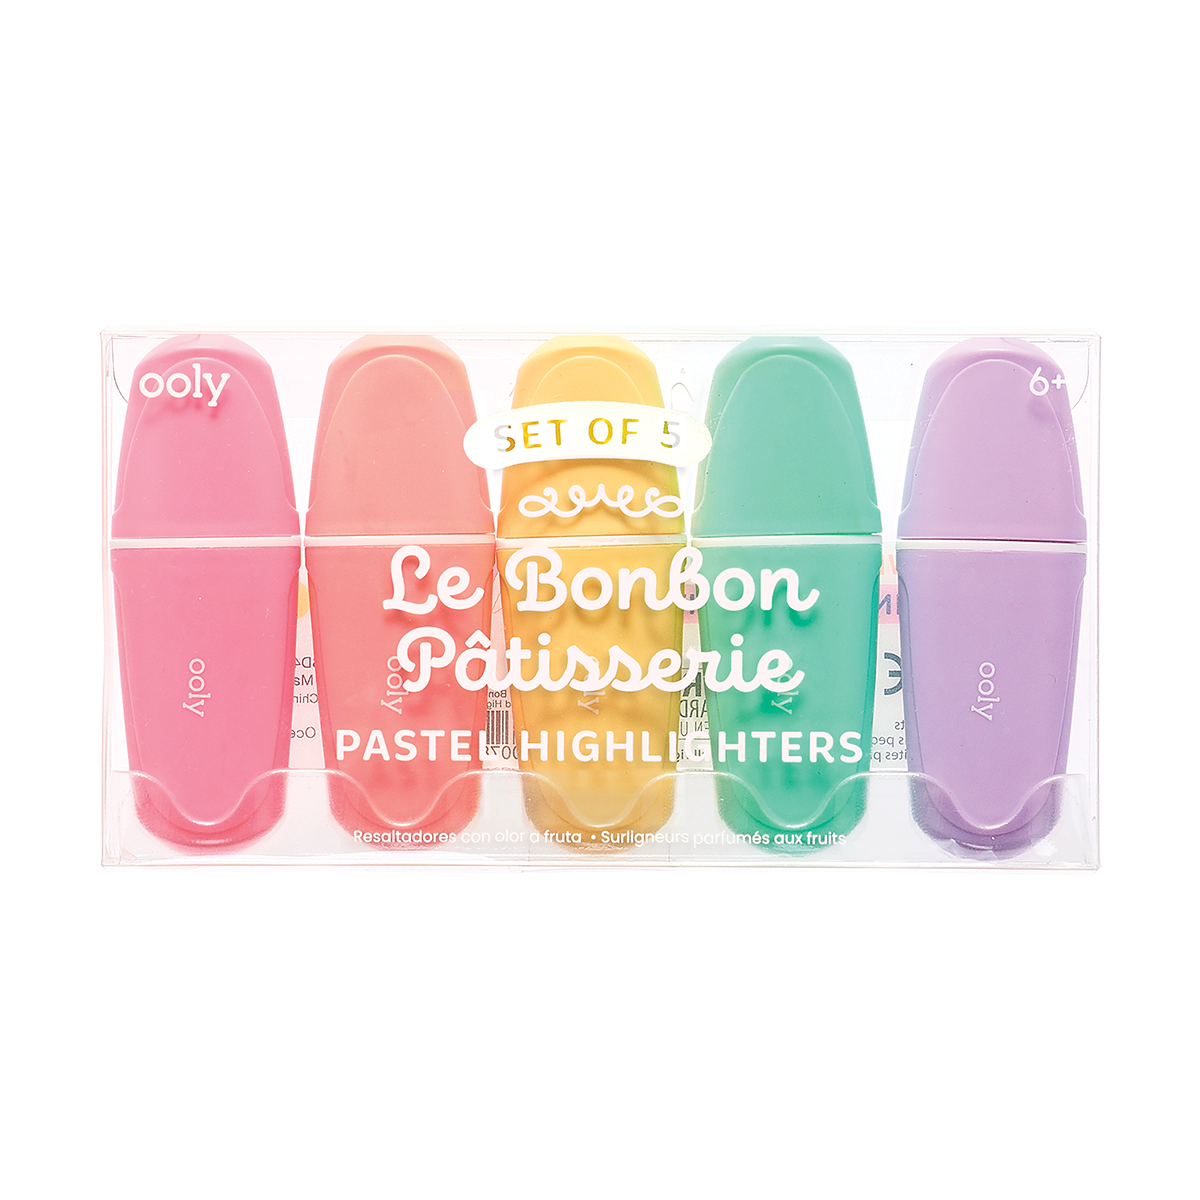 OOLY Le Bonbon Patisserie Pastel Highlighters in packaging